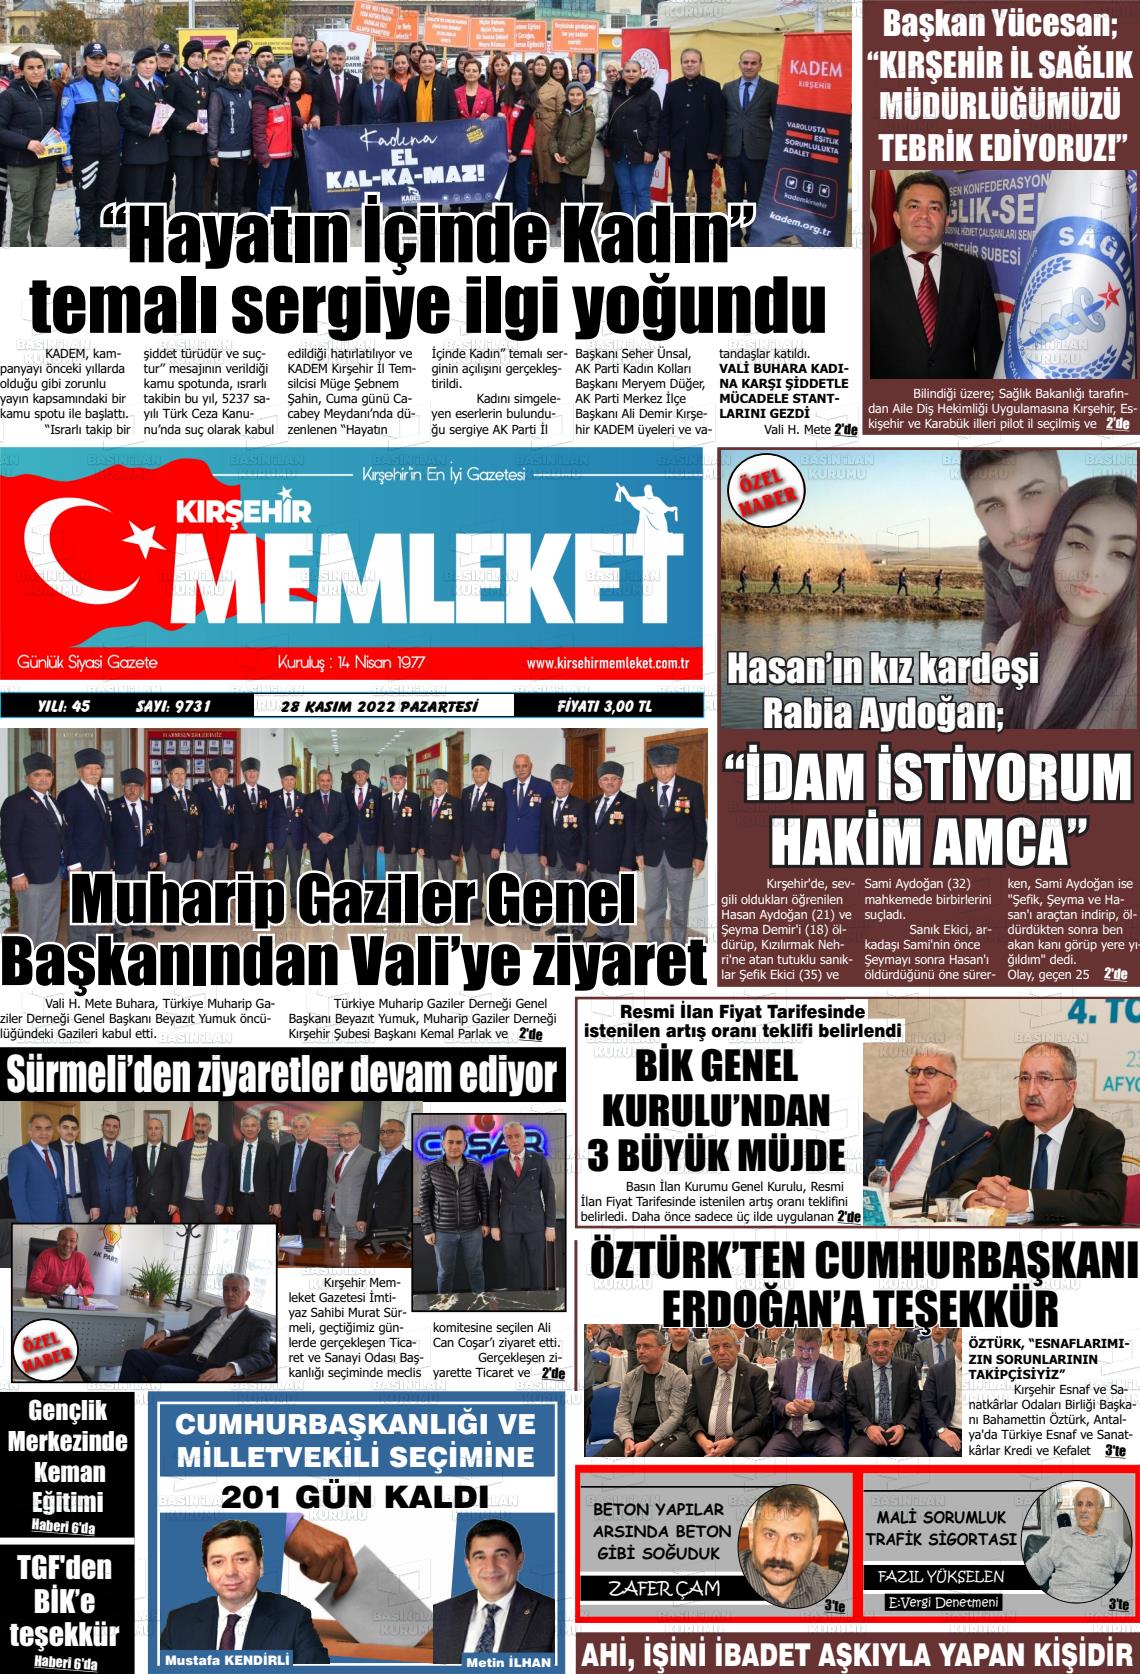 28 Kasım 2022 Kırşehir Memleket Gazete Manşeti